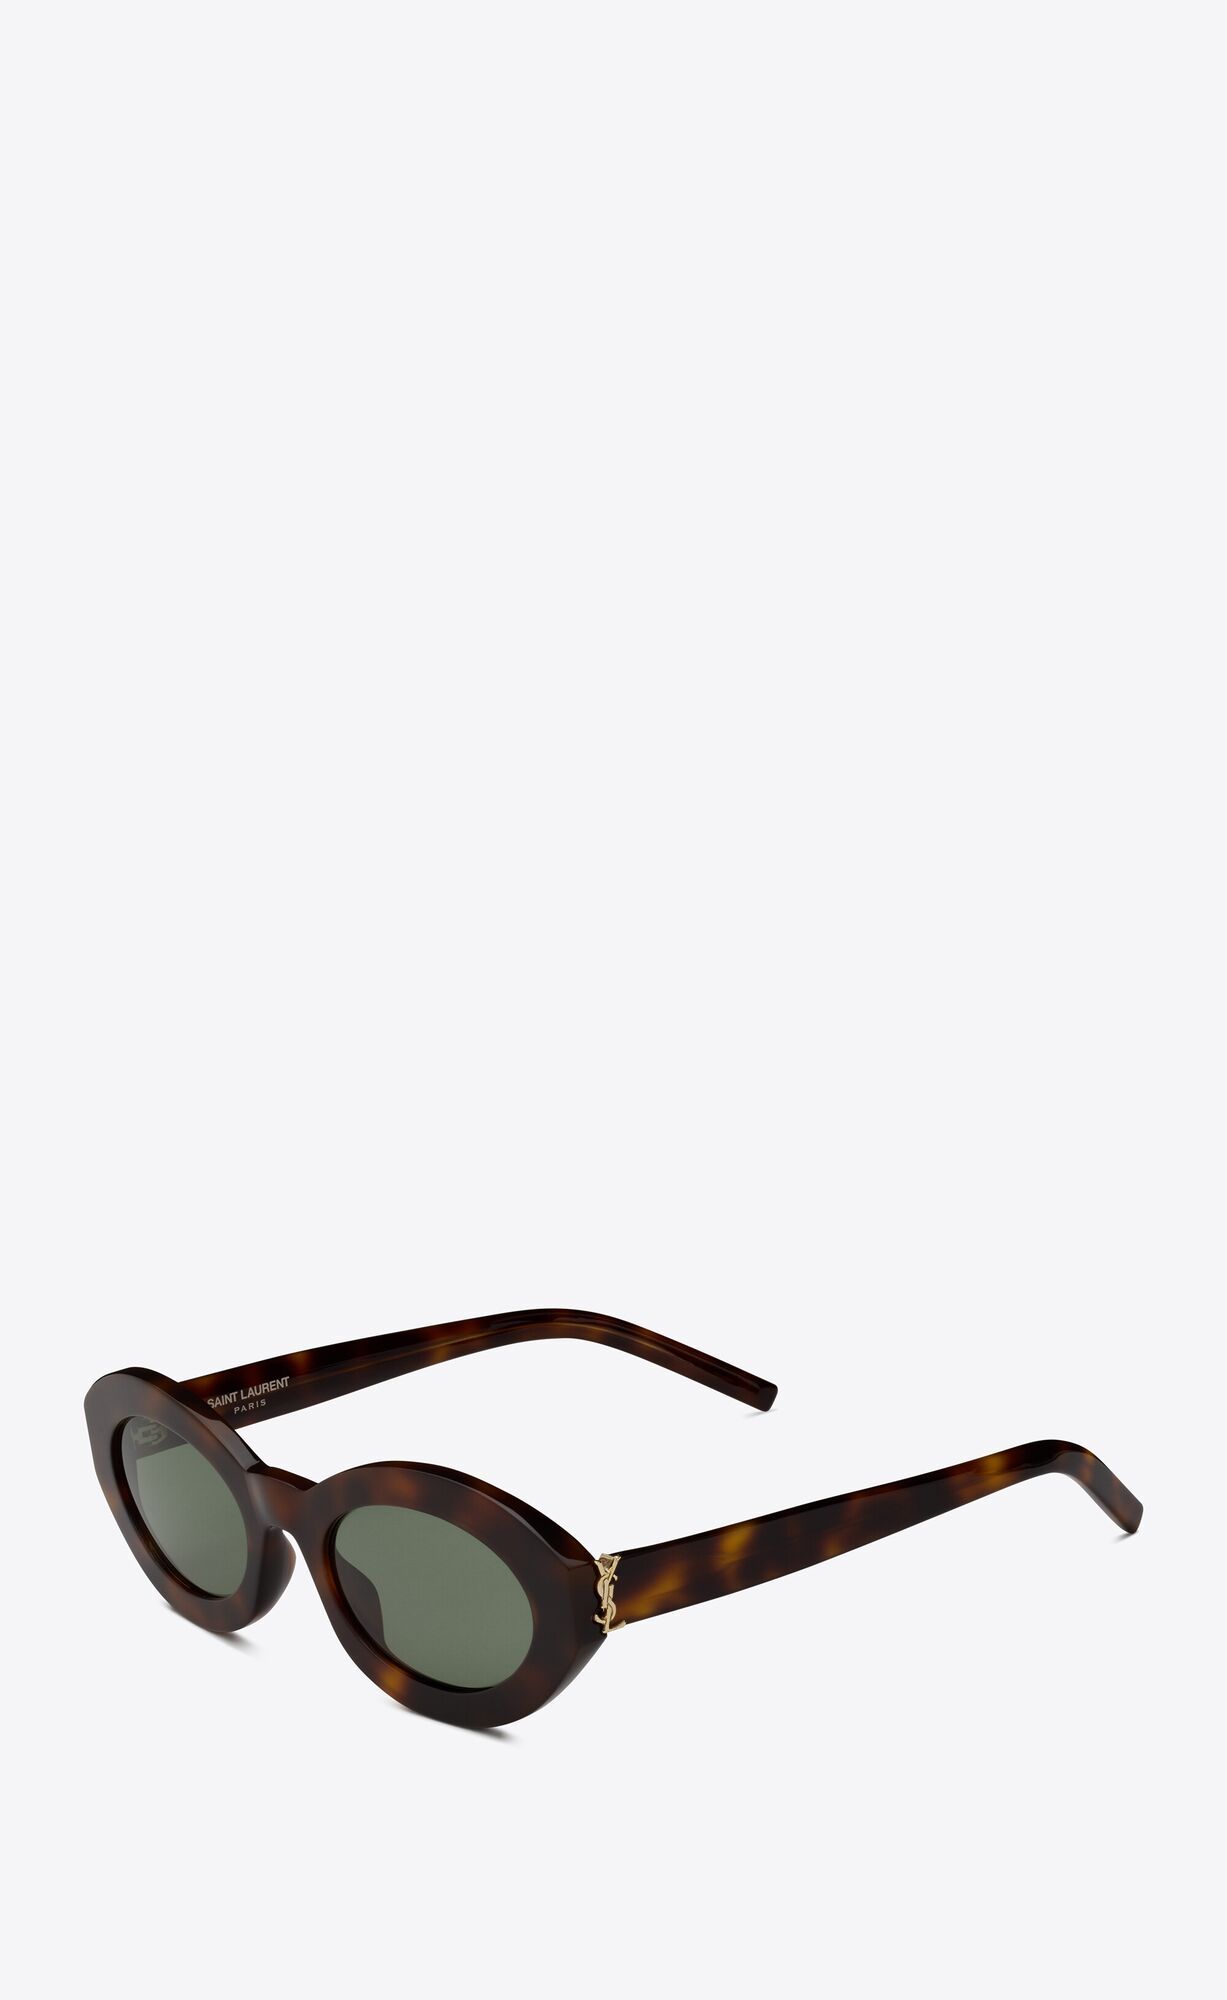 tortoiseshell sunglasses with oval acetate frames and nylon lenses. | Saint Laurent Inc. (Global)